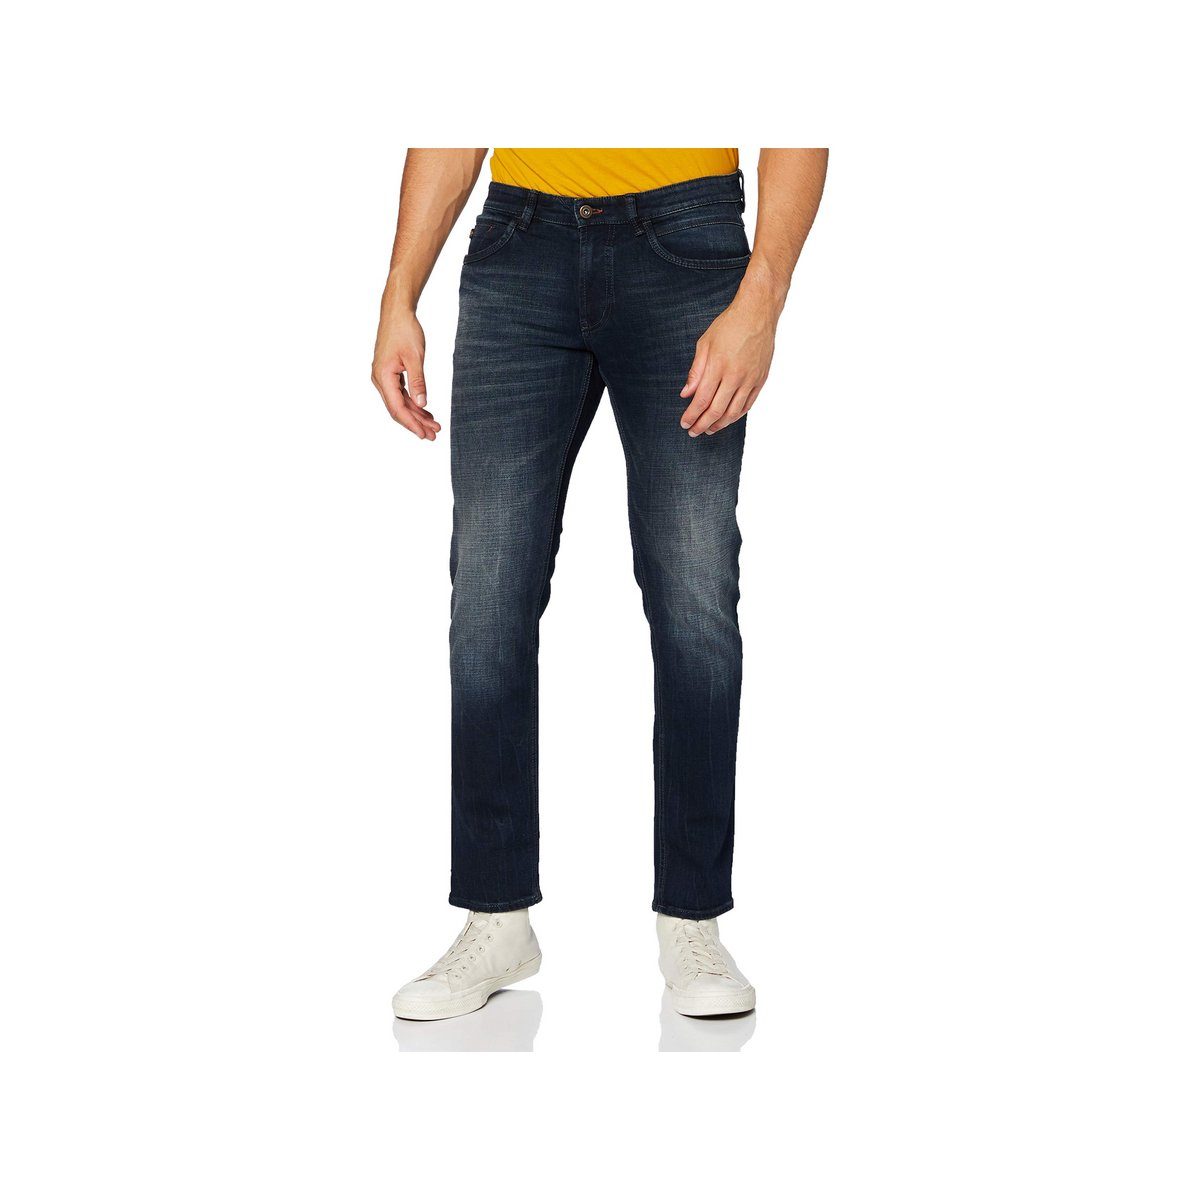 Hattric BLUE dunkel-blau regular (1-tlg) BLACK Straight-Jeans